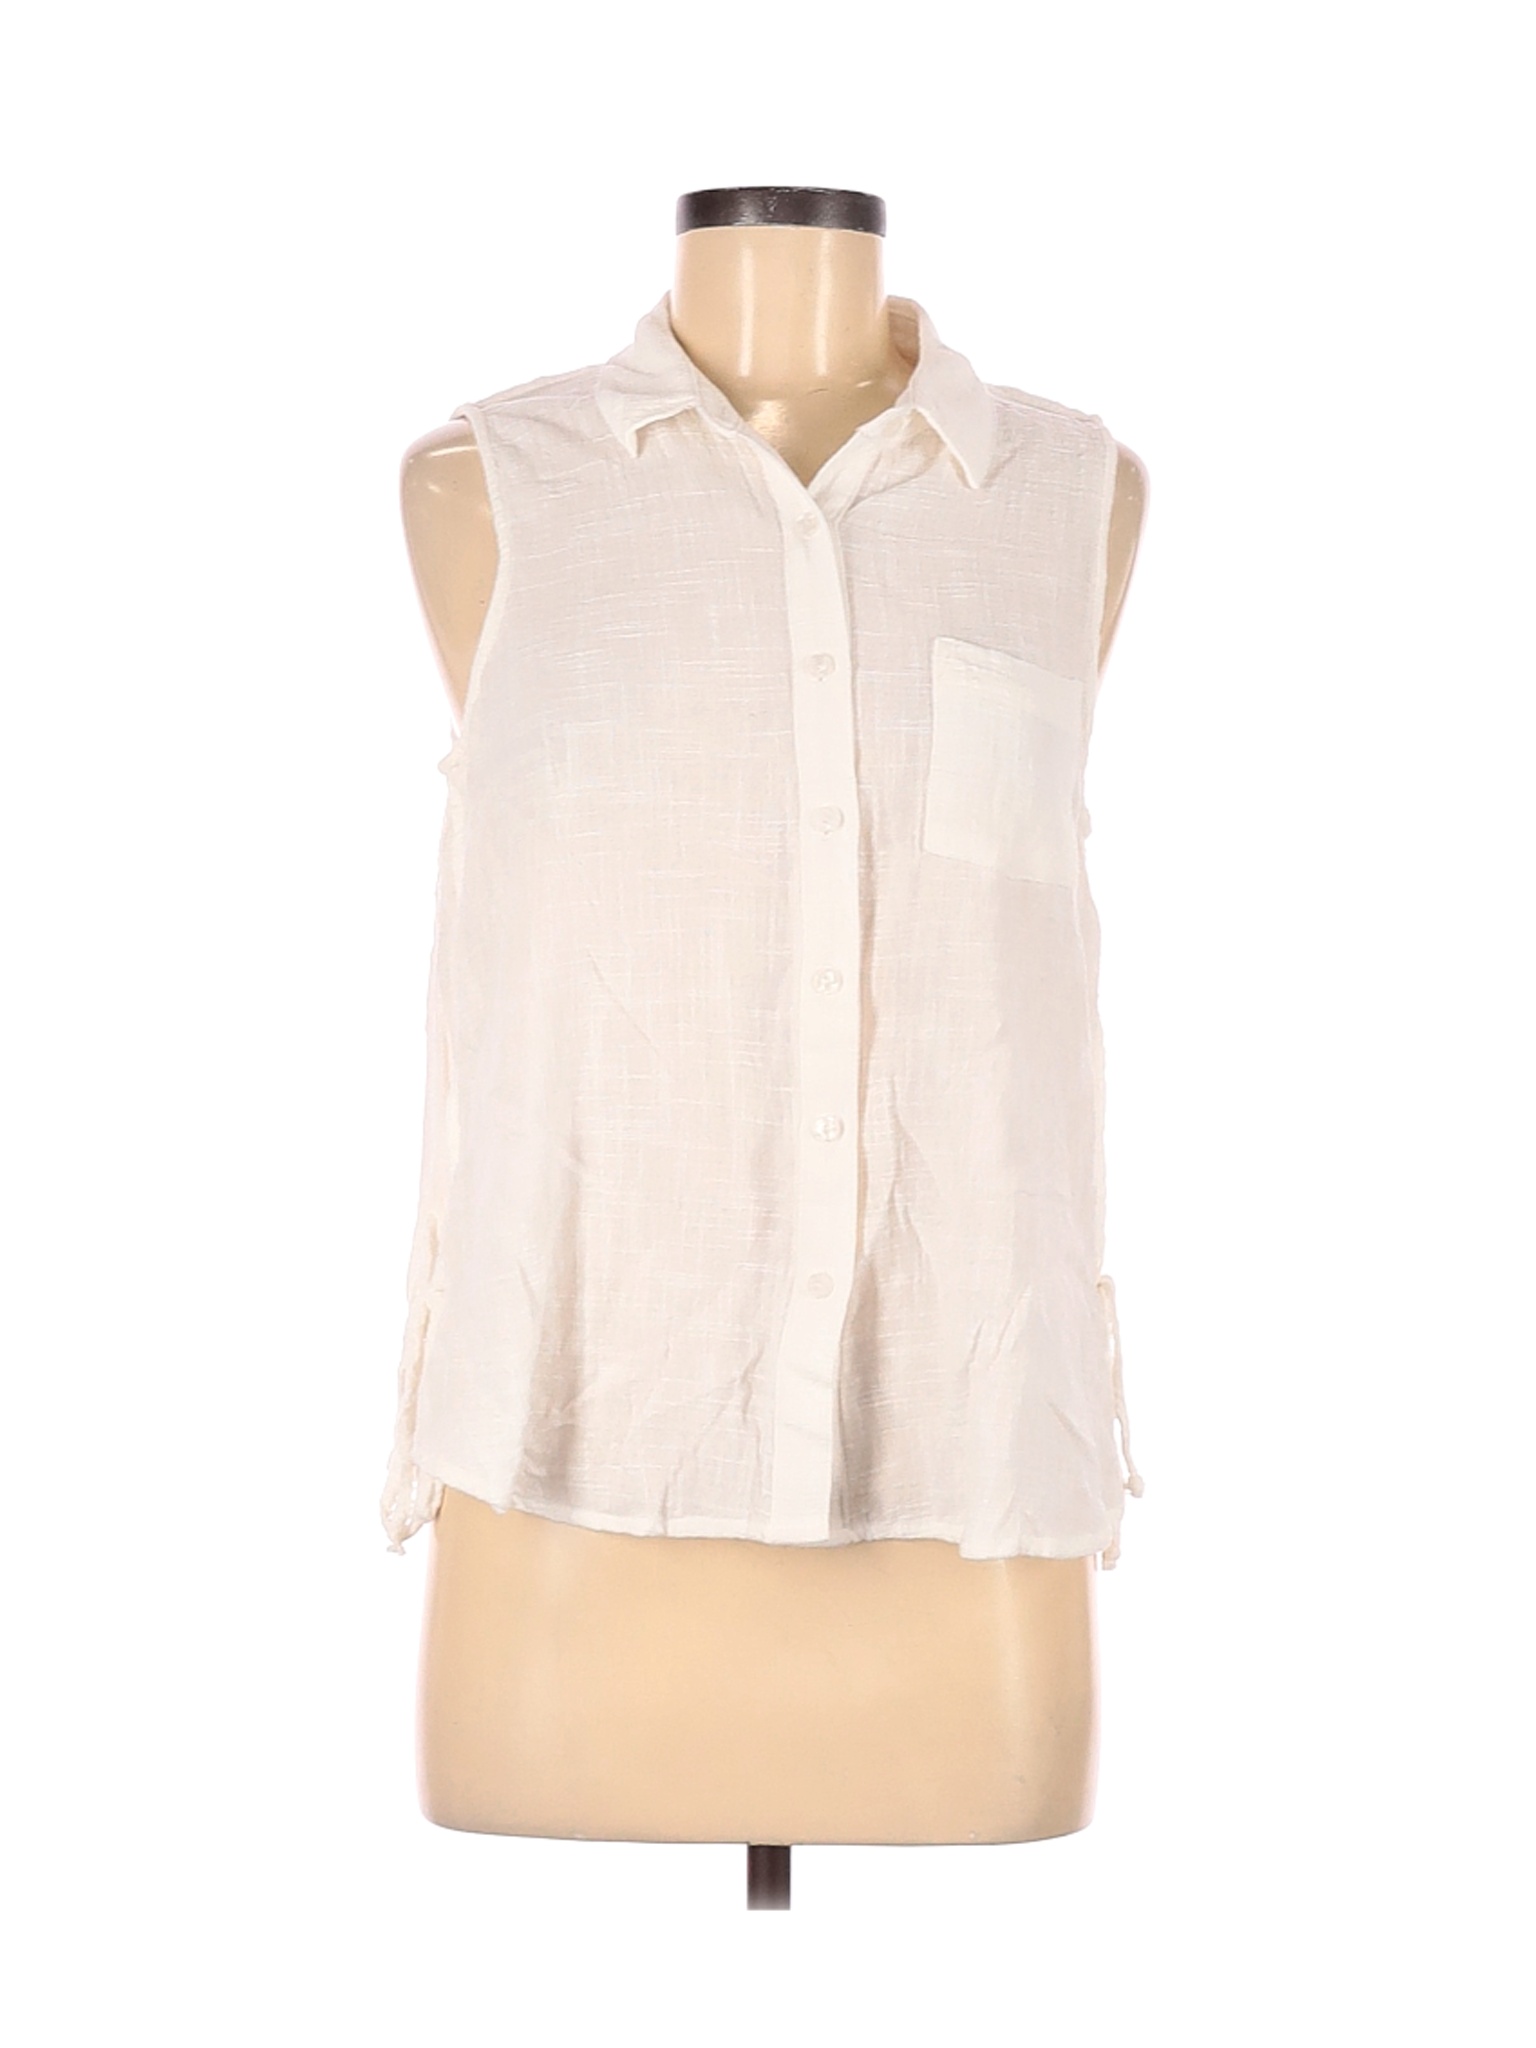 Universal Thread Women Ivory Sleeveless Button-Down Shirt M | eBay